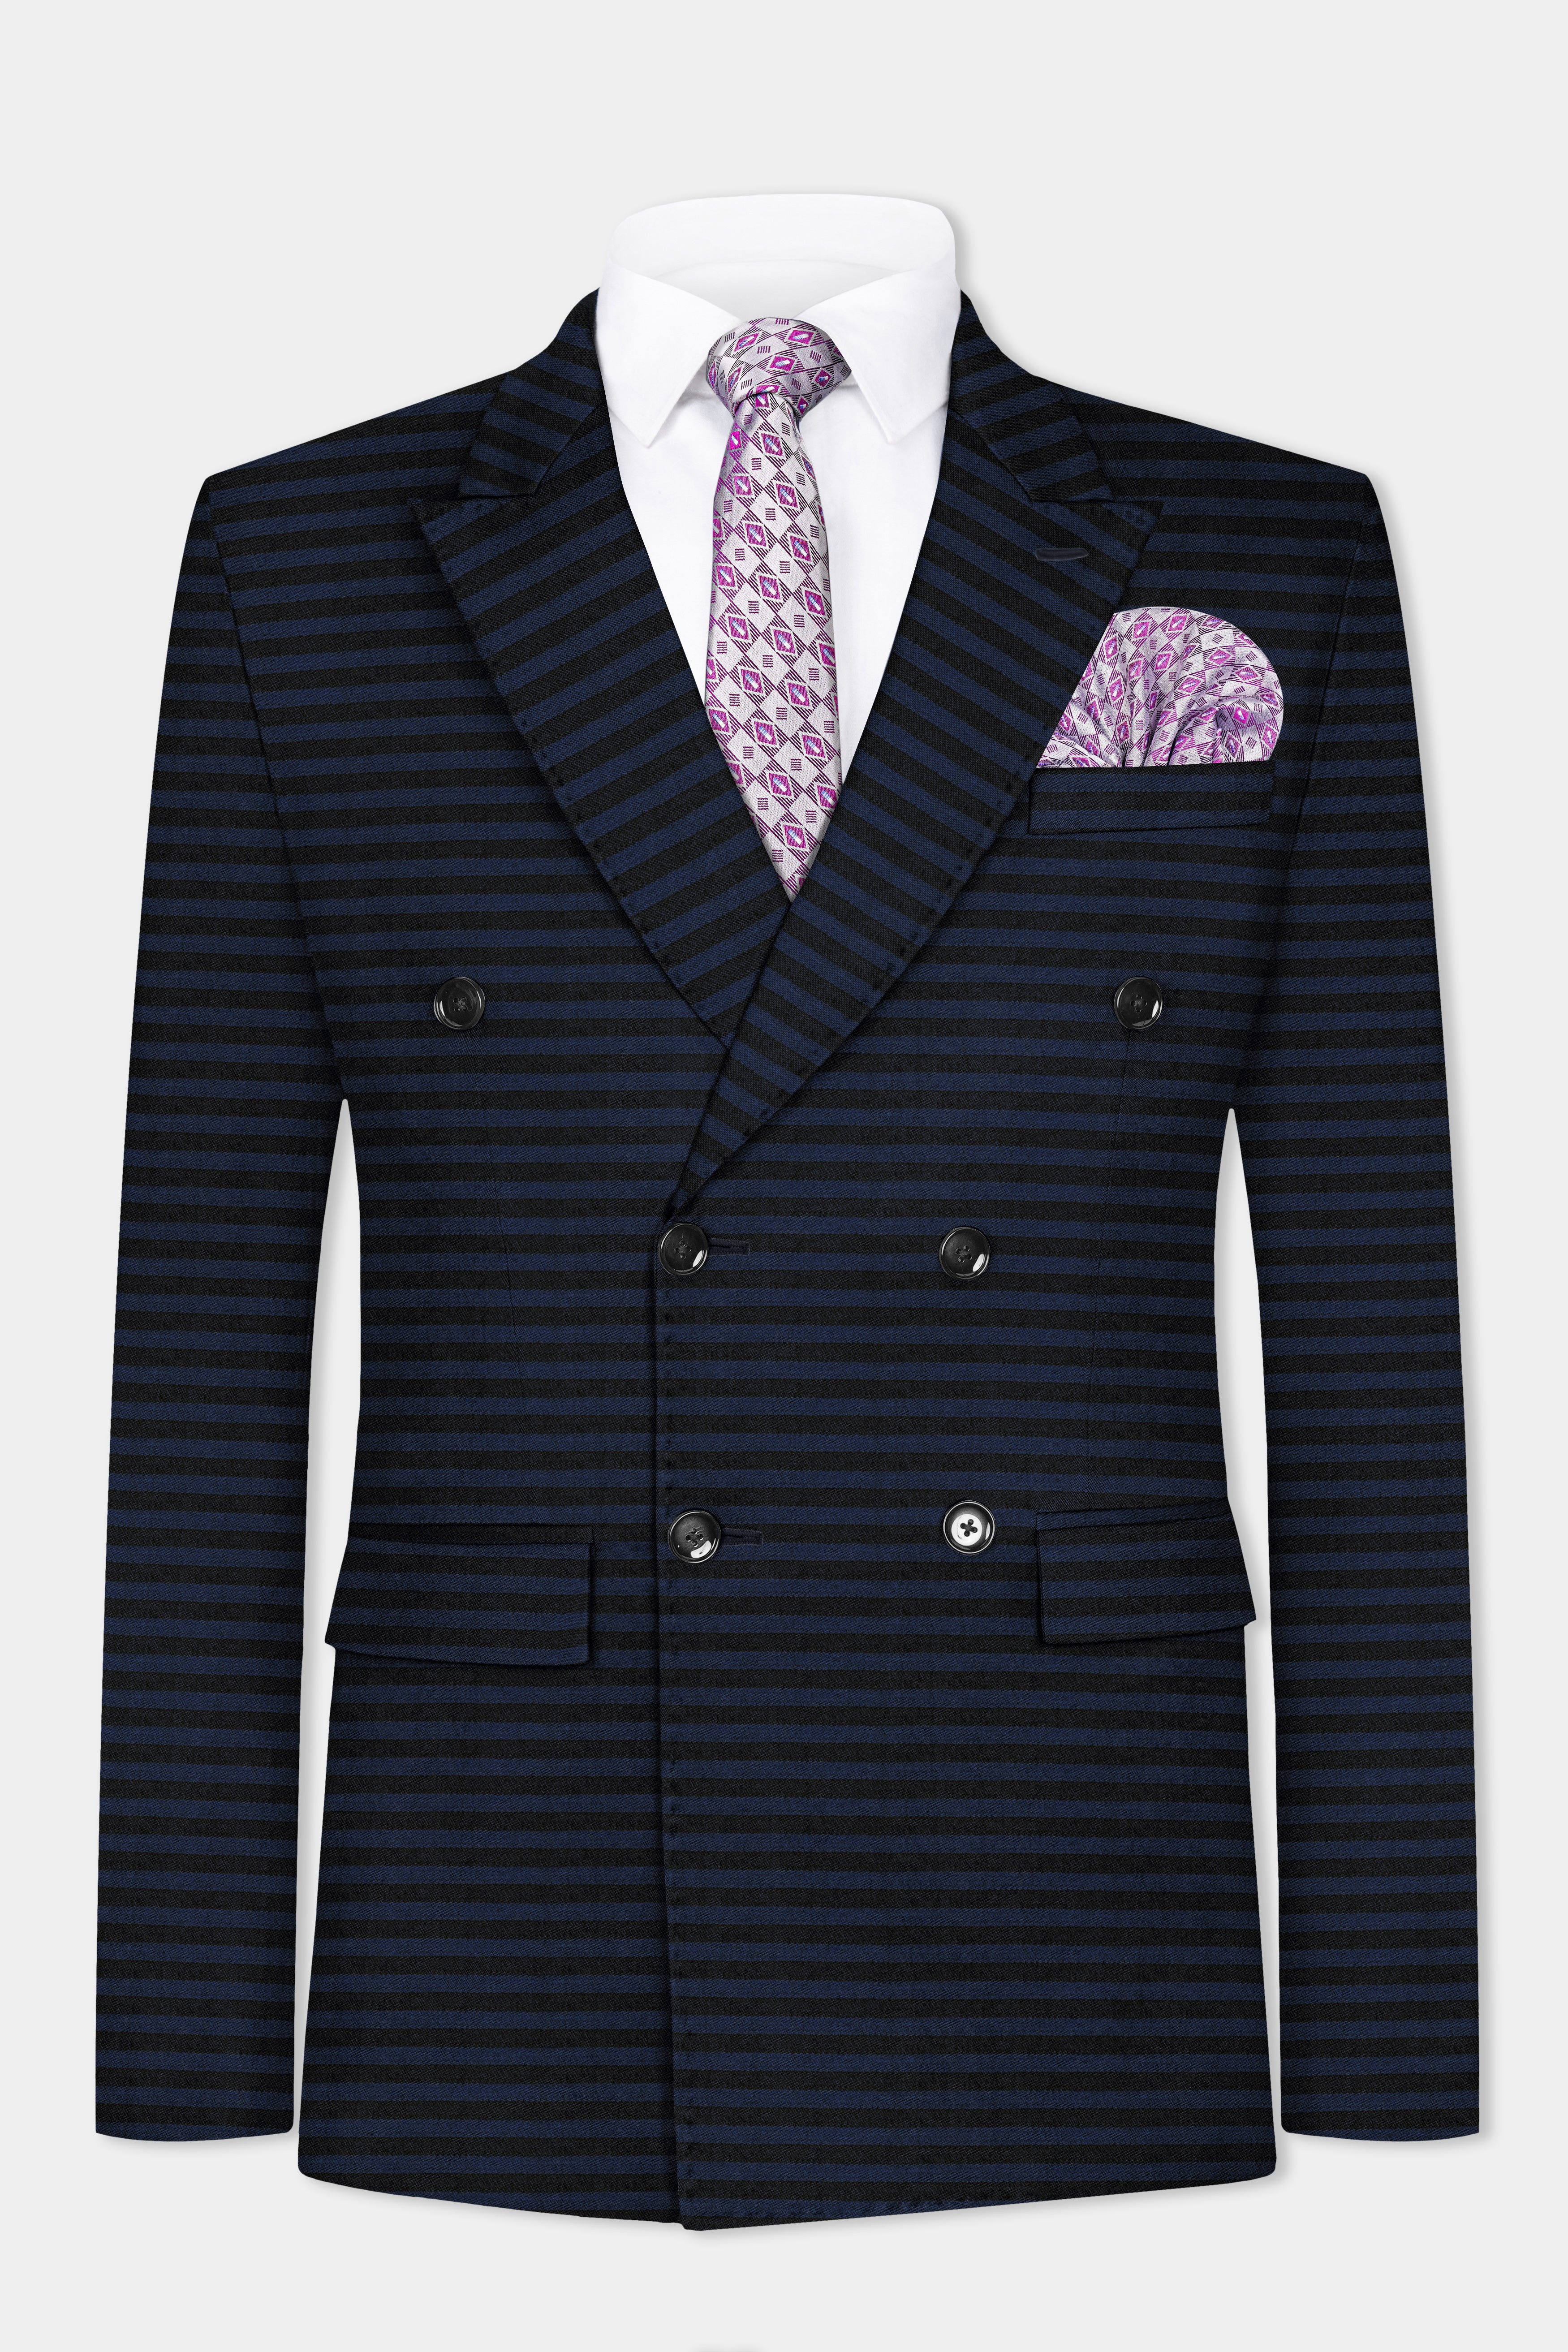 Mirage Blue and Black Horizontal Striped Wool Blend Blazer